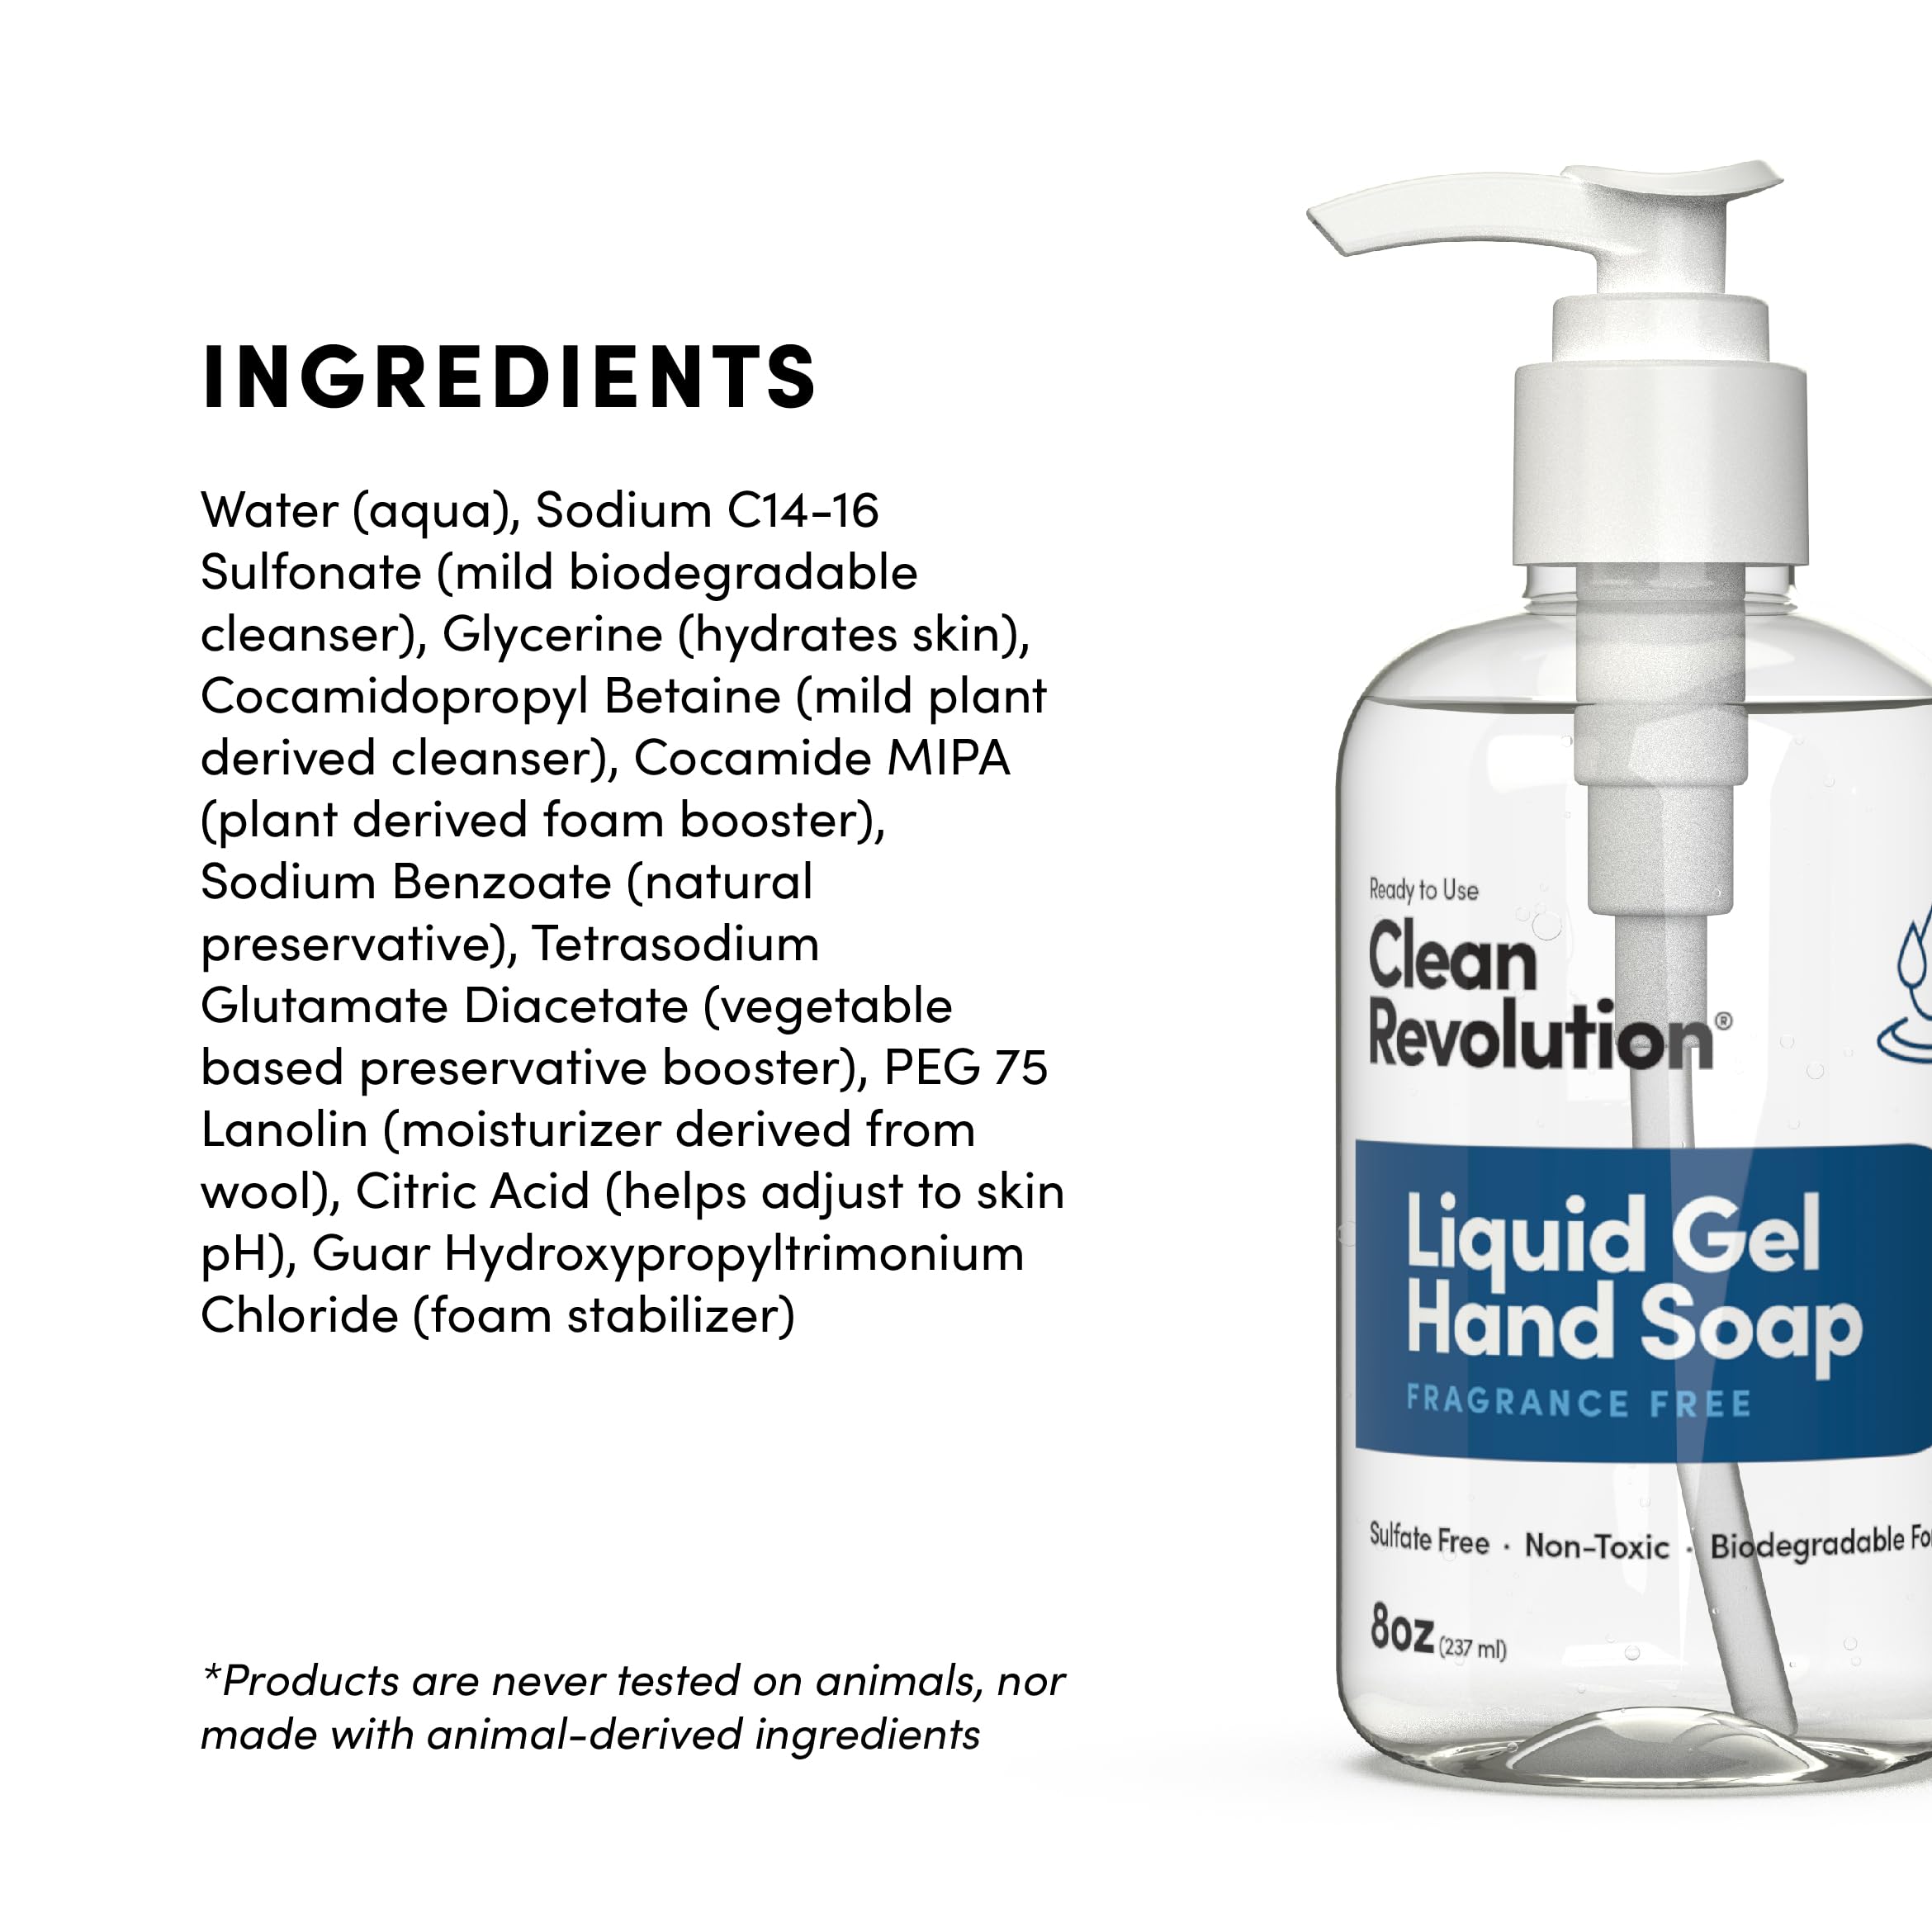 Clean Revolution Liquid Gel Hand Soap, Silky Rich Liquid, Quick Lather, Fast Rinsing (Fragrance Free) 8 Fl Oz